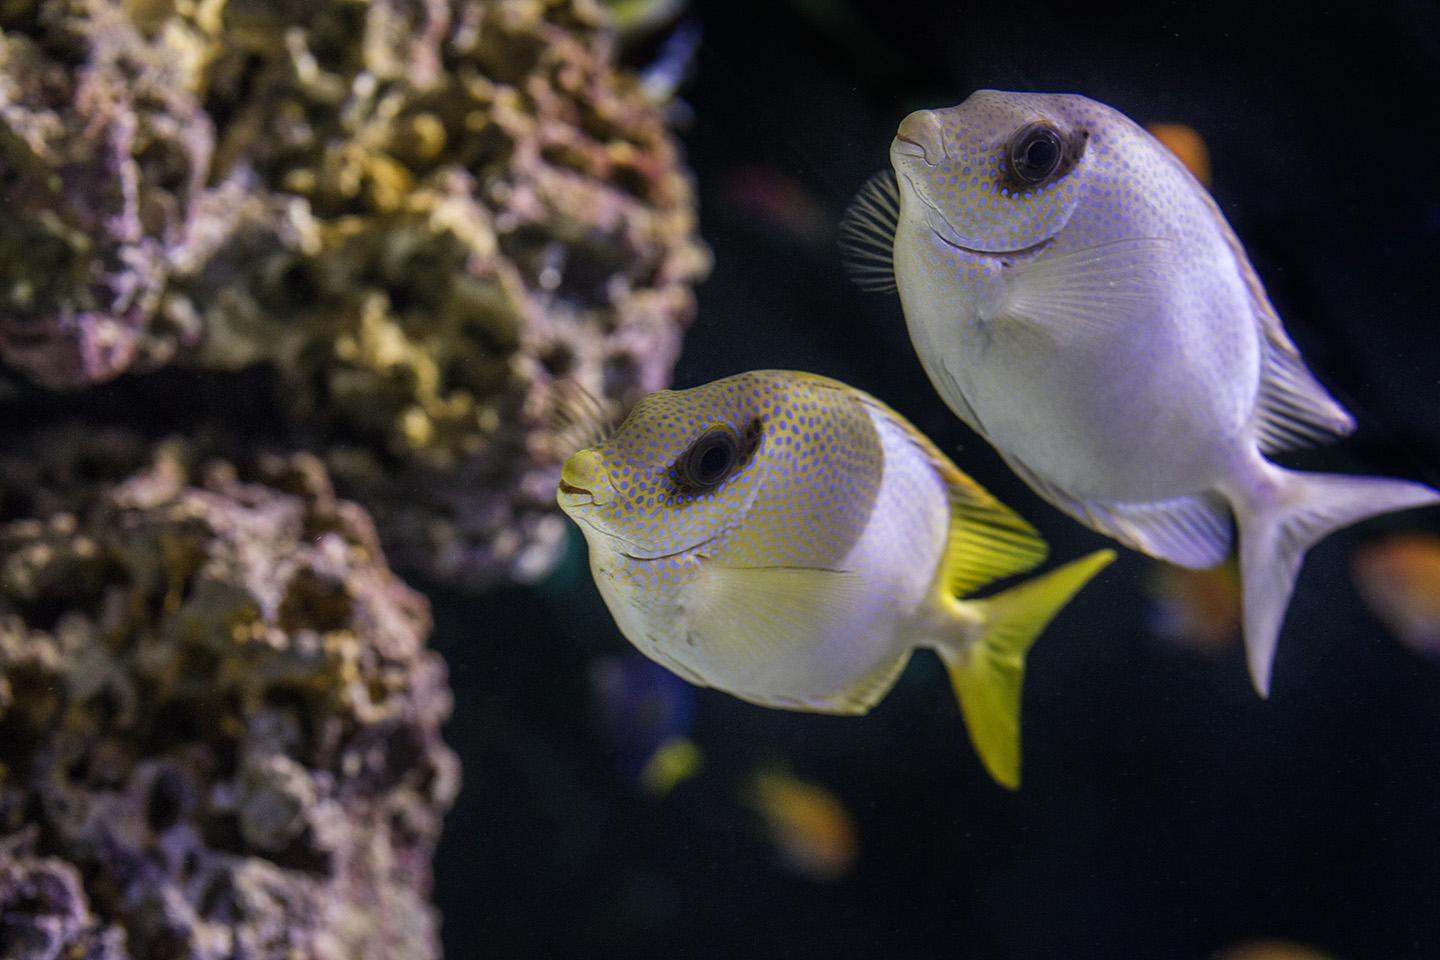 A new exhibit at Shedd Aquarium will display the "vibrant beauty of marine life" through 100 different species. (© Shedd Aquarium / Brenna Hernandez)